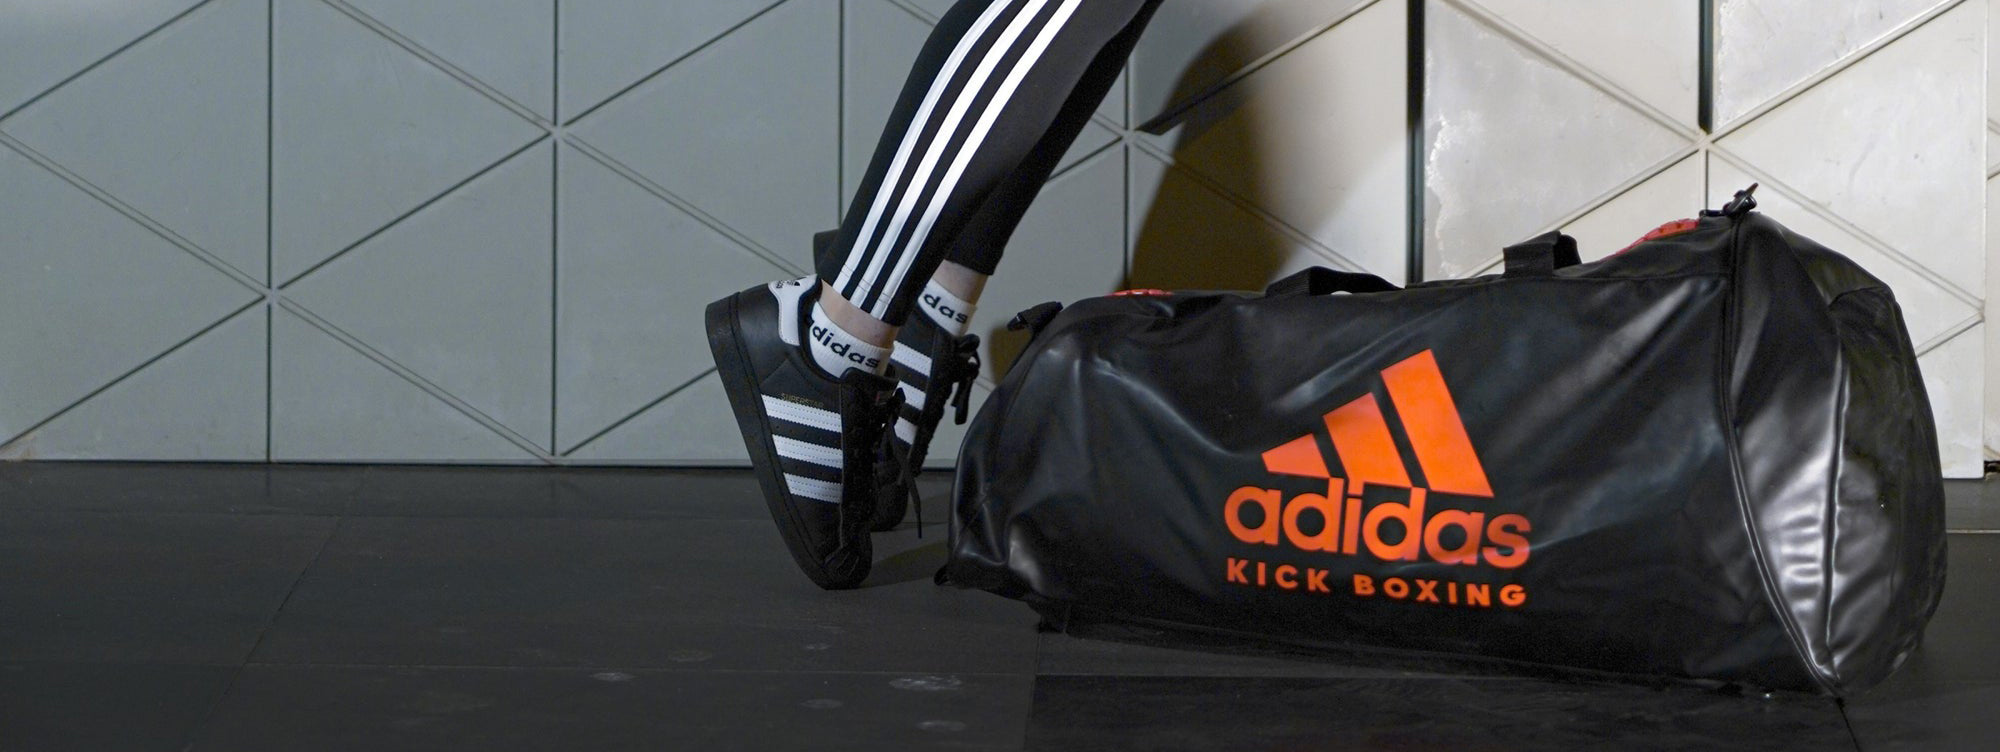 Adidas kickboxing bags | duffel | backpacks